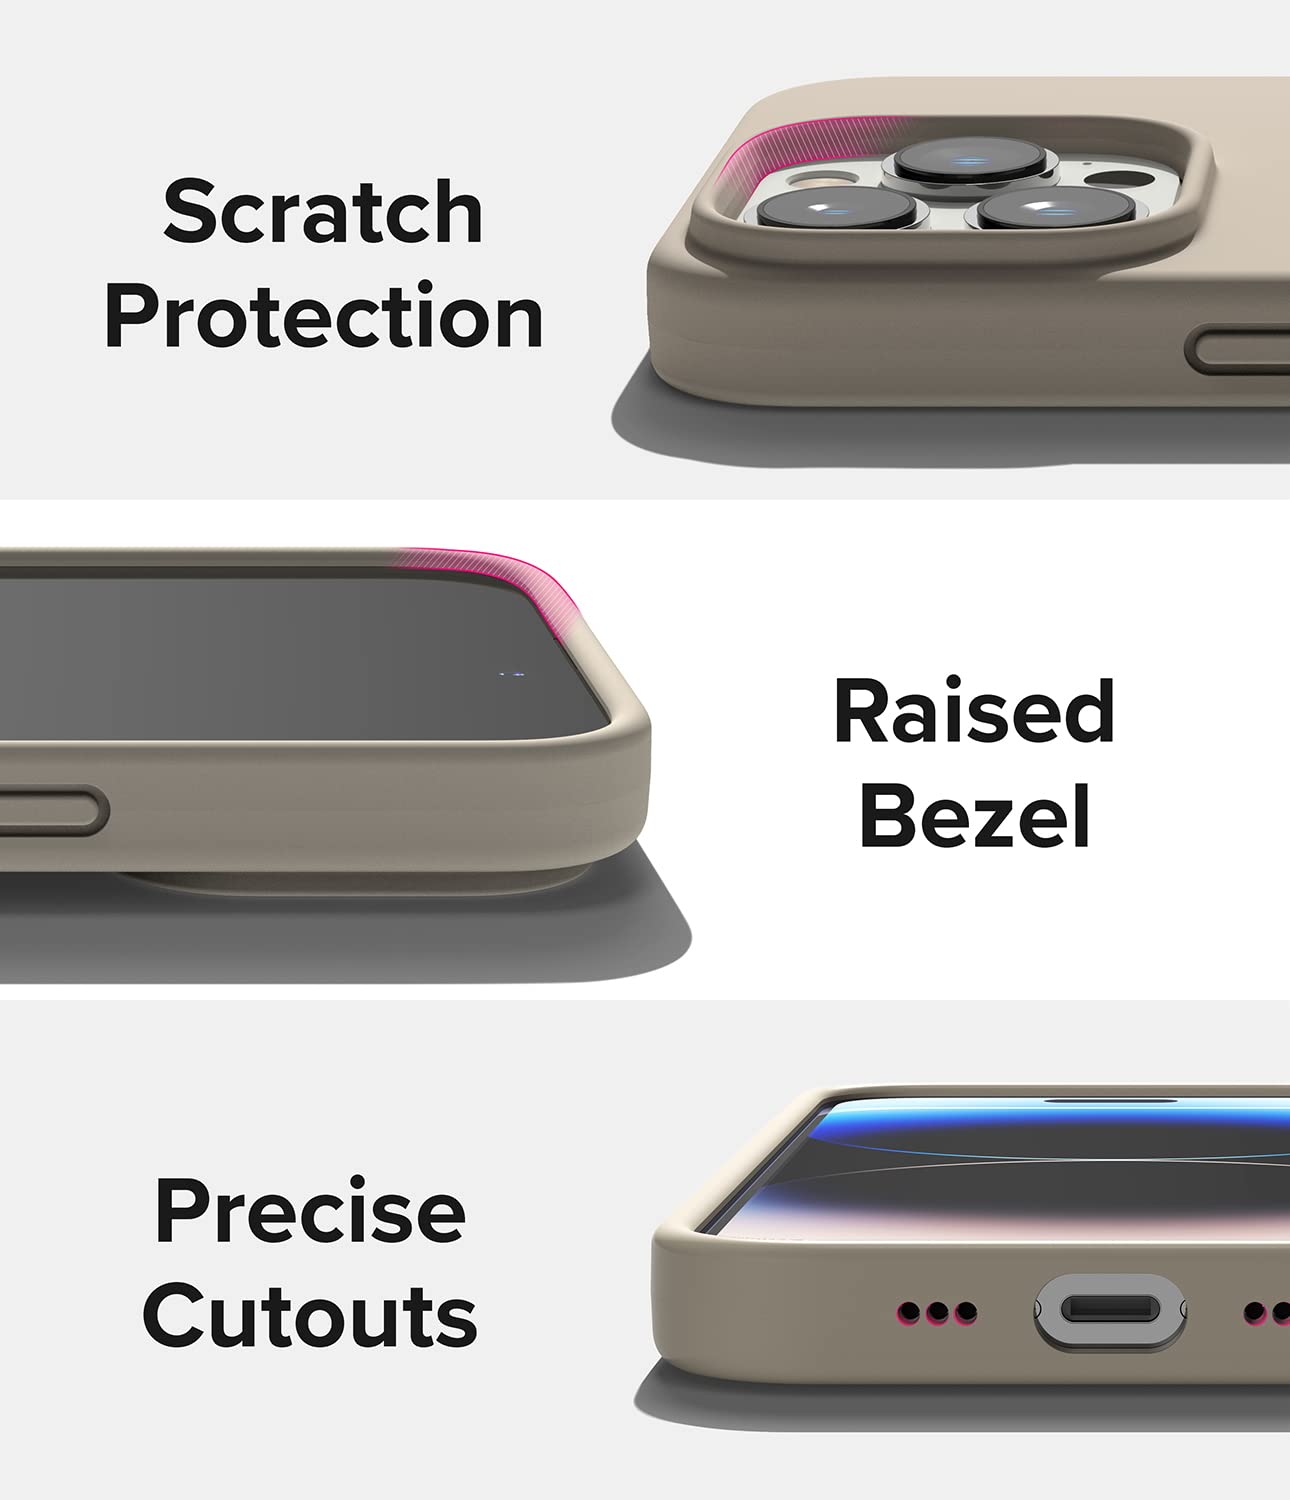 iPhone 12 Pro Max Case - Best Minimalist Silicone Phone Case Stone